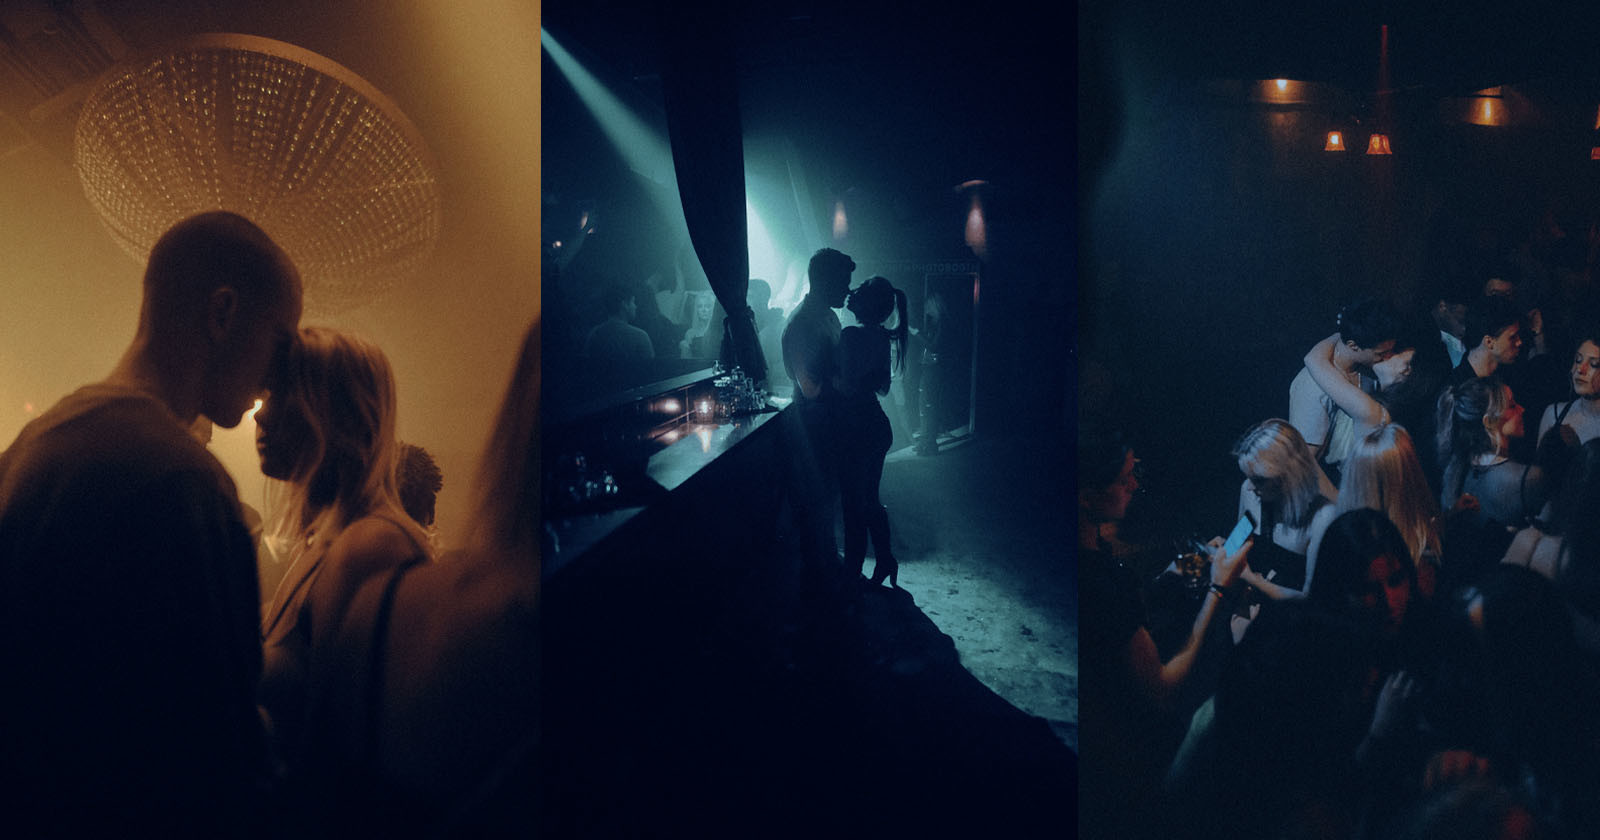  evocative nightclub photos capture moments public intimacy 